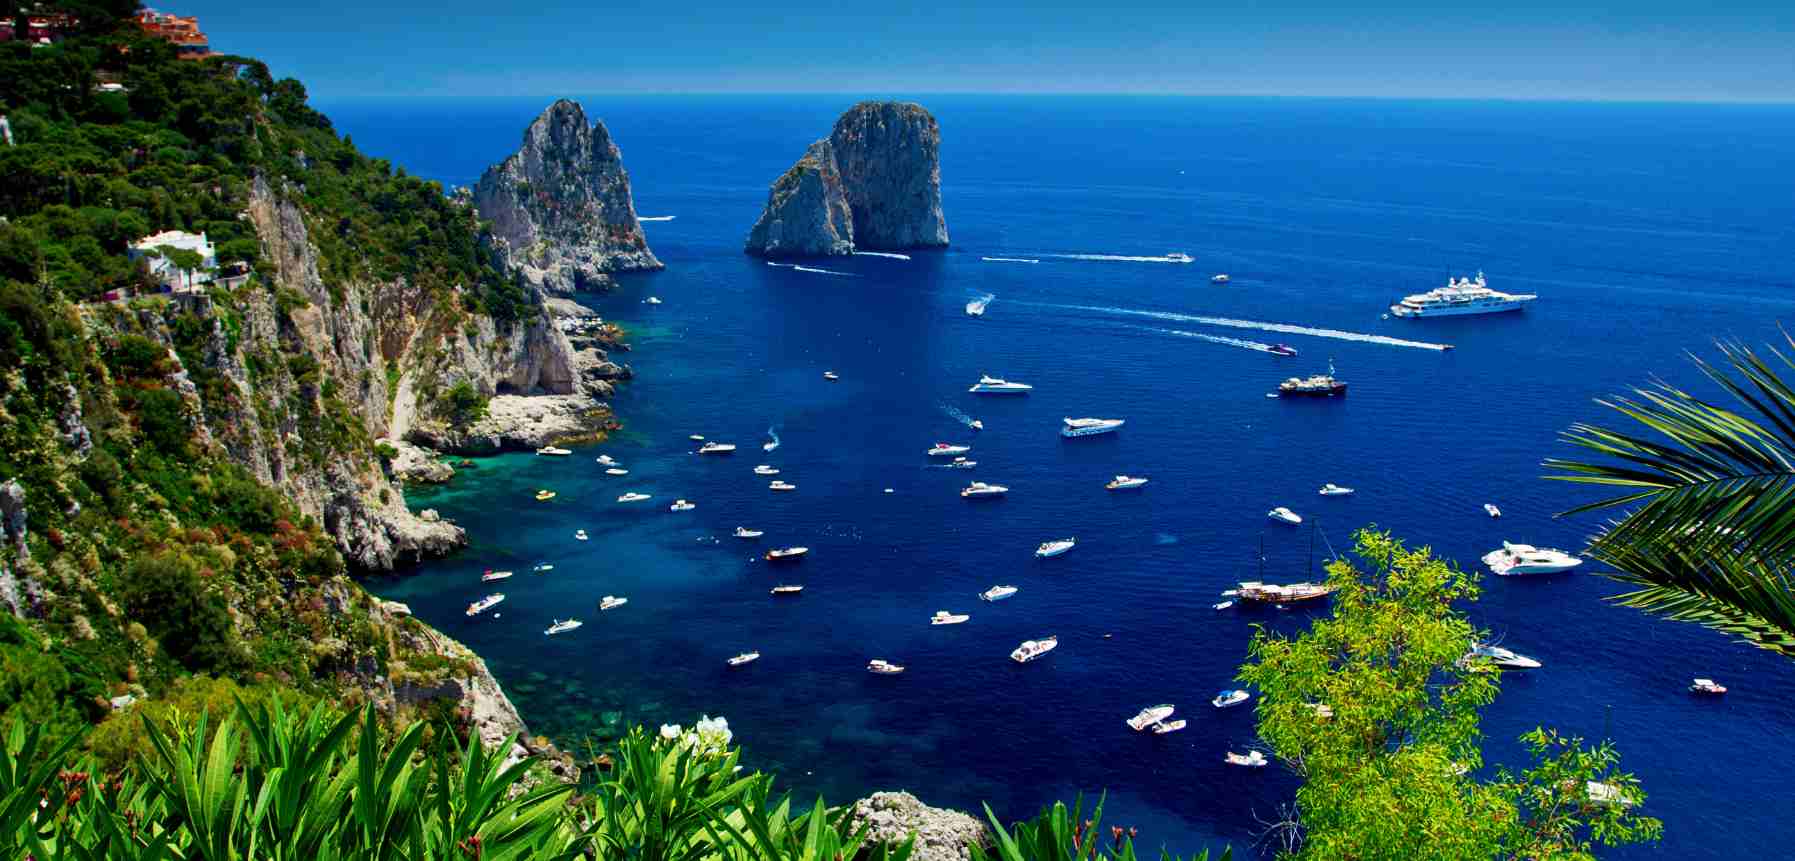  Visit the Island of Capri